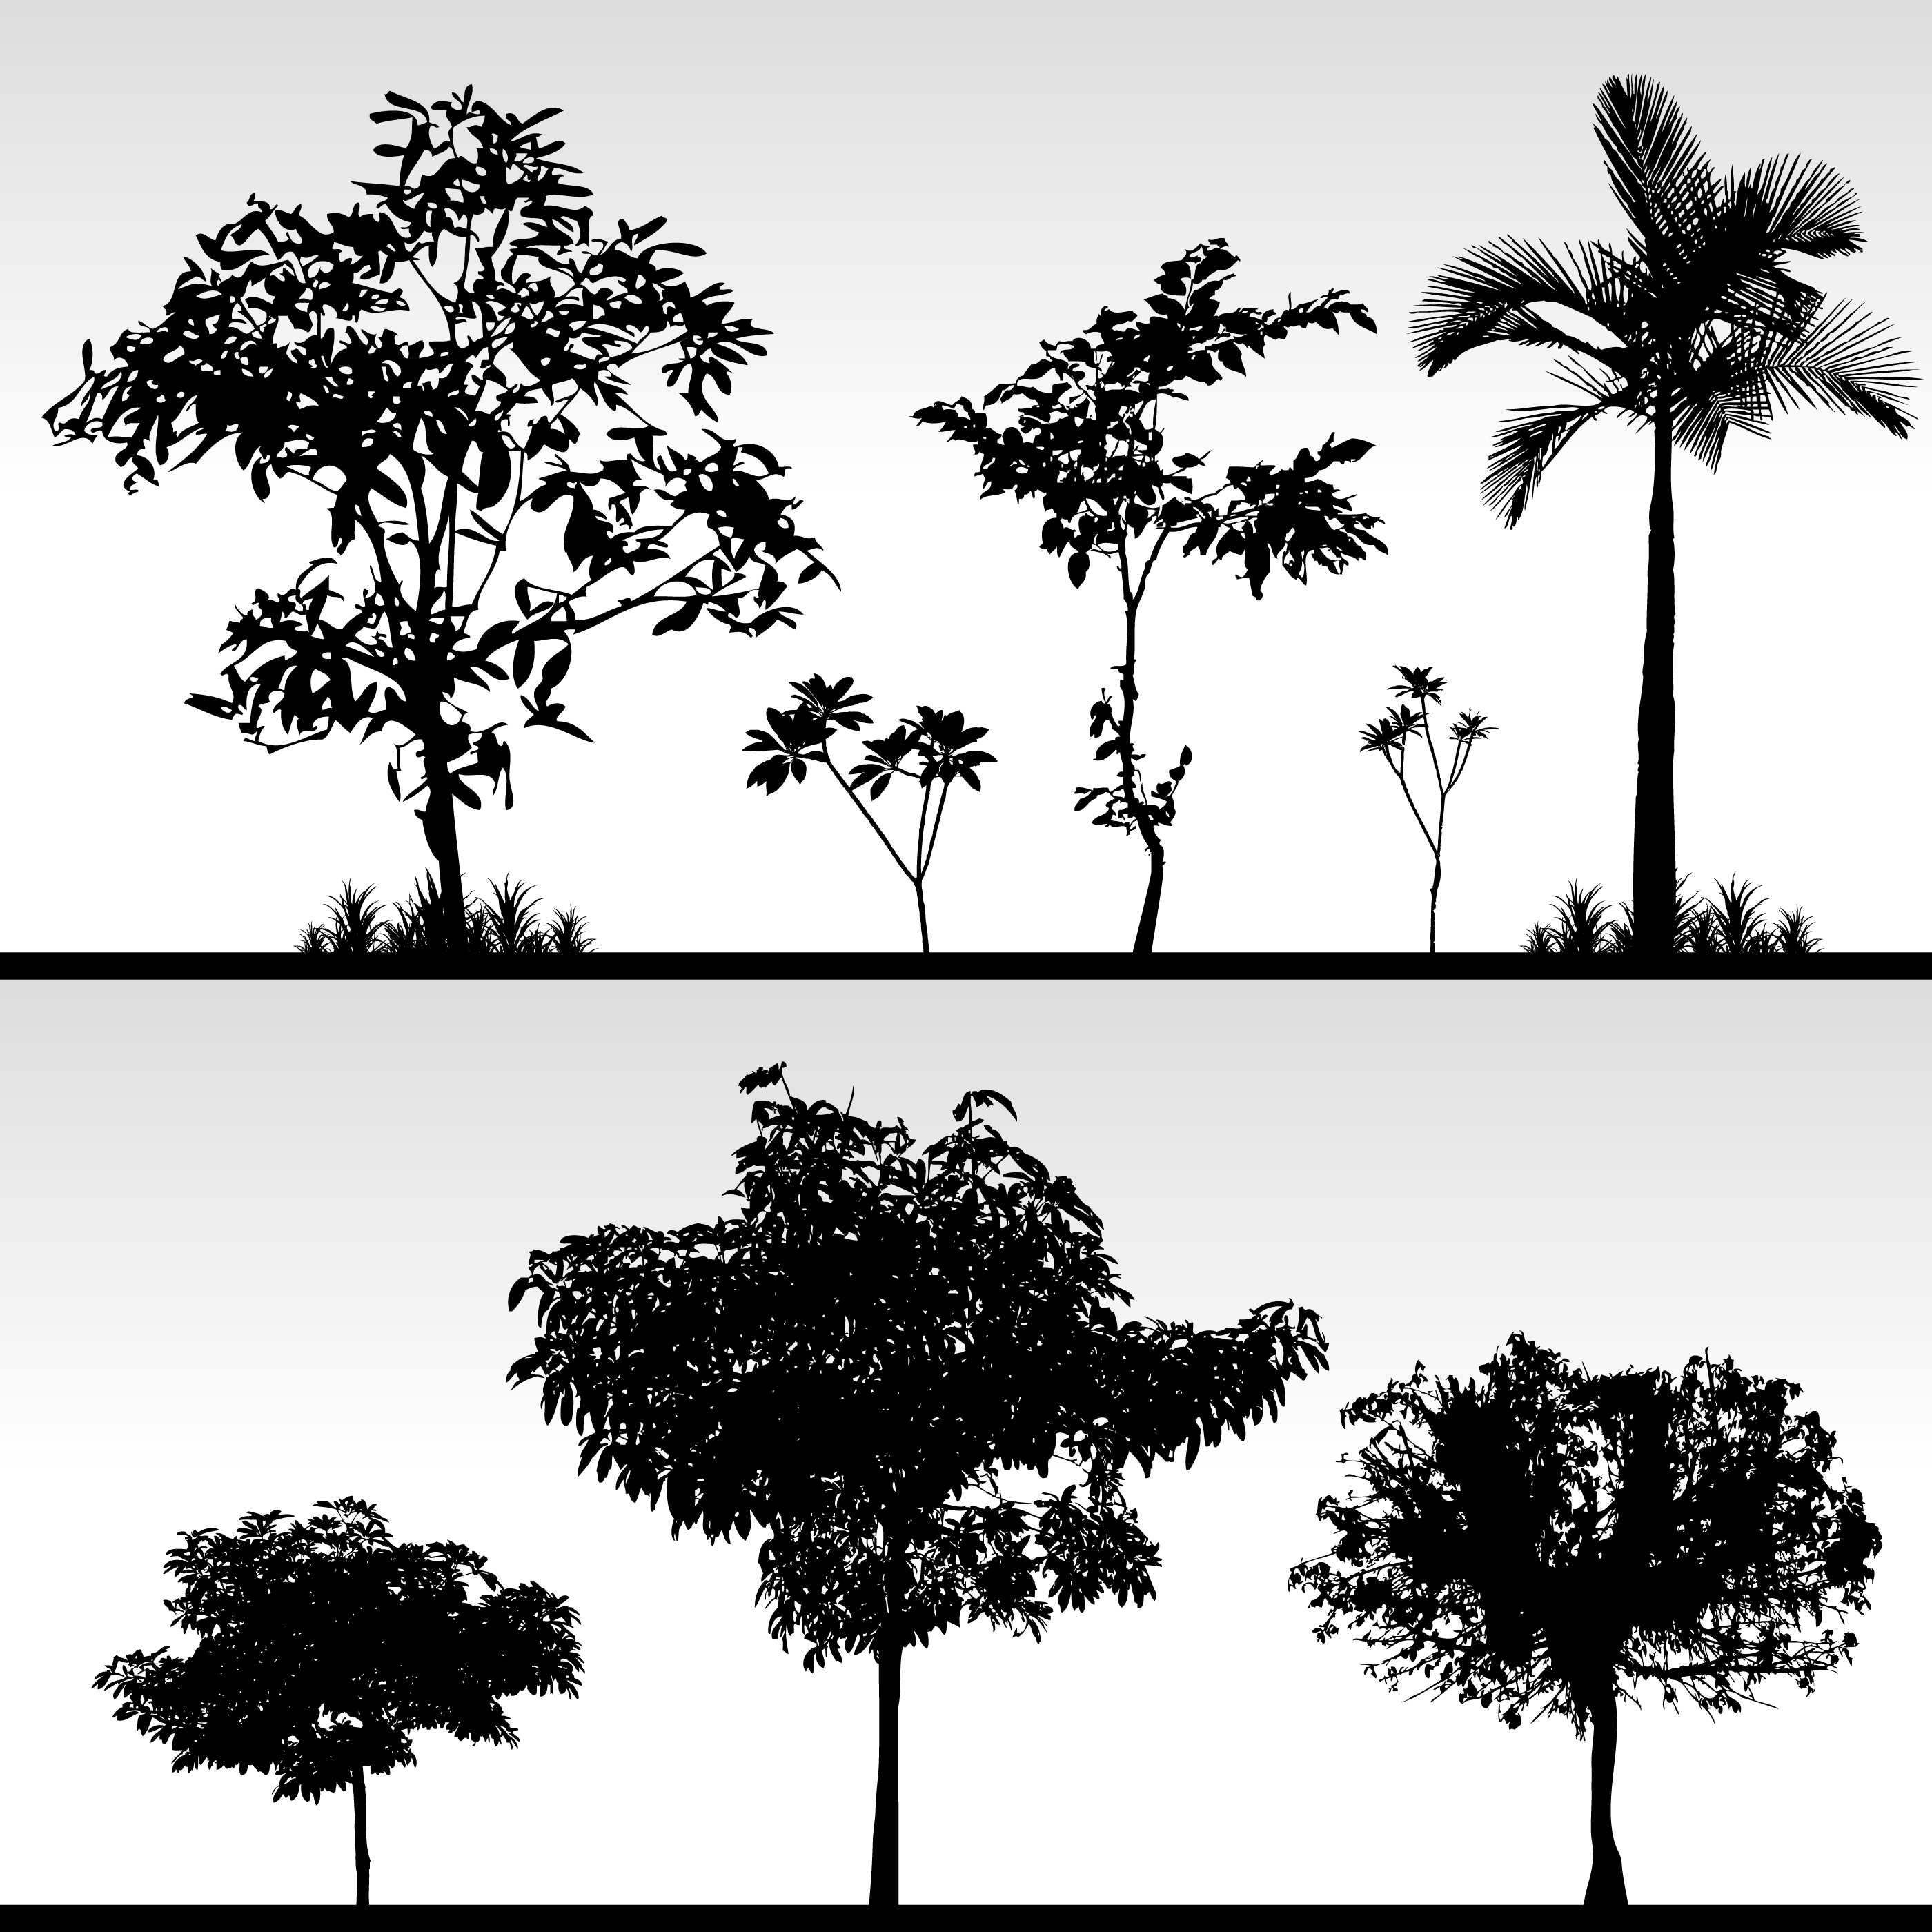 Download Tree Grass Silhouette. - Download Free Vectors, Clipart Graphics & Vector Art